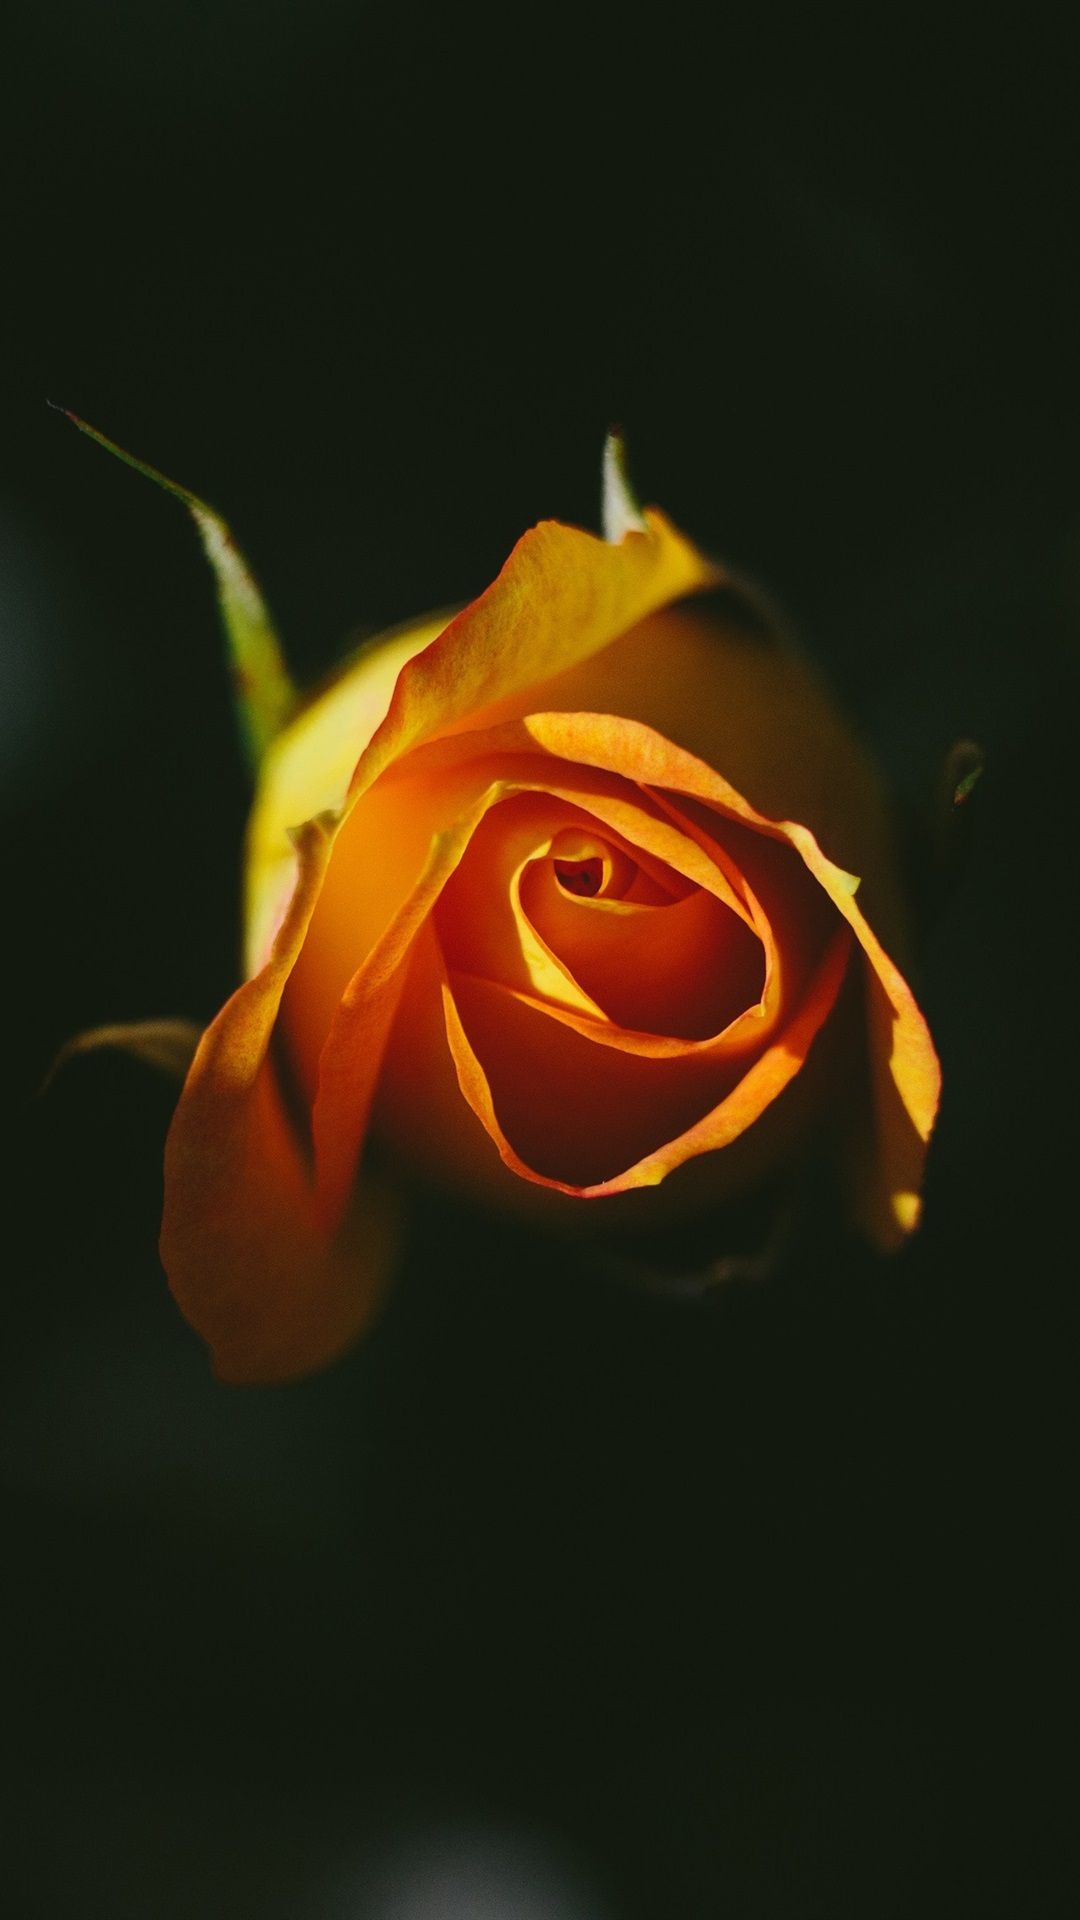 Orange Rose, Black Background 1080x1920 IPhone 8 7 6 6S Plus Wallpaper, Background, Picture, Image